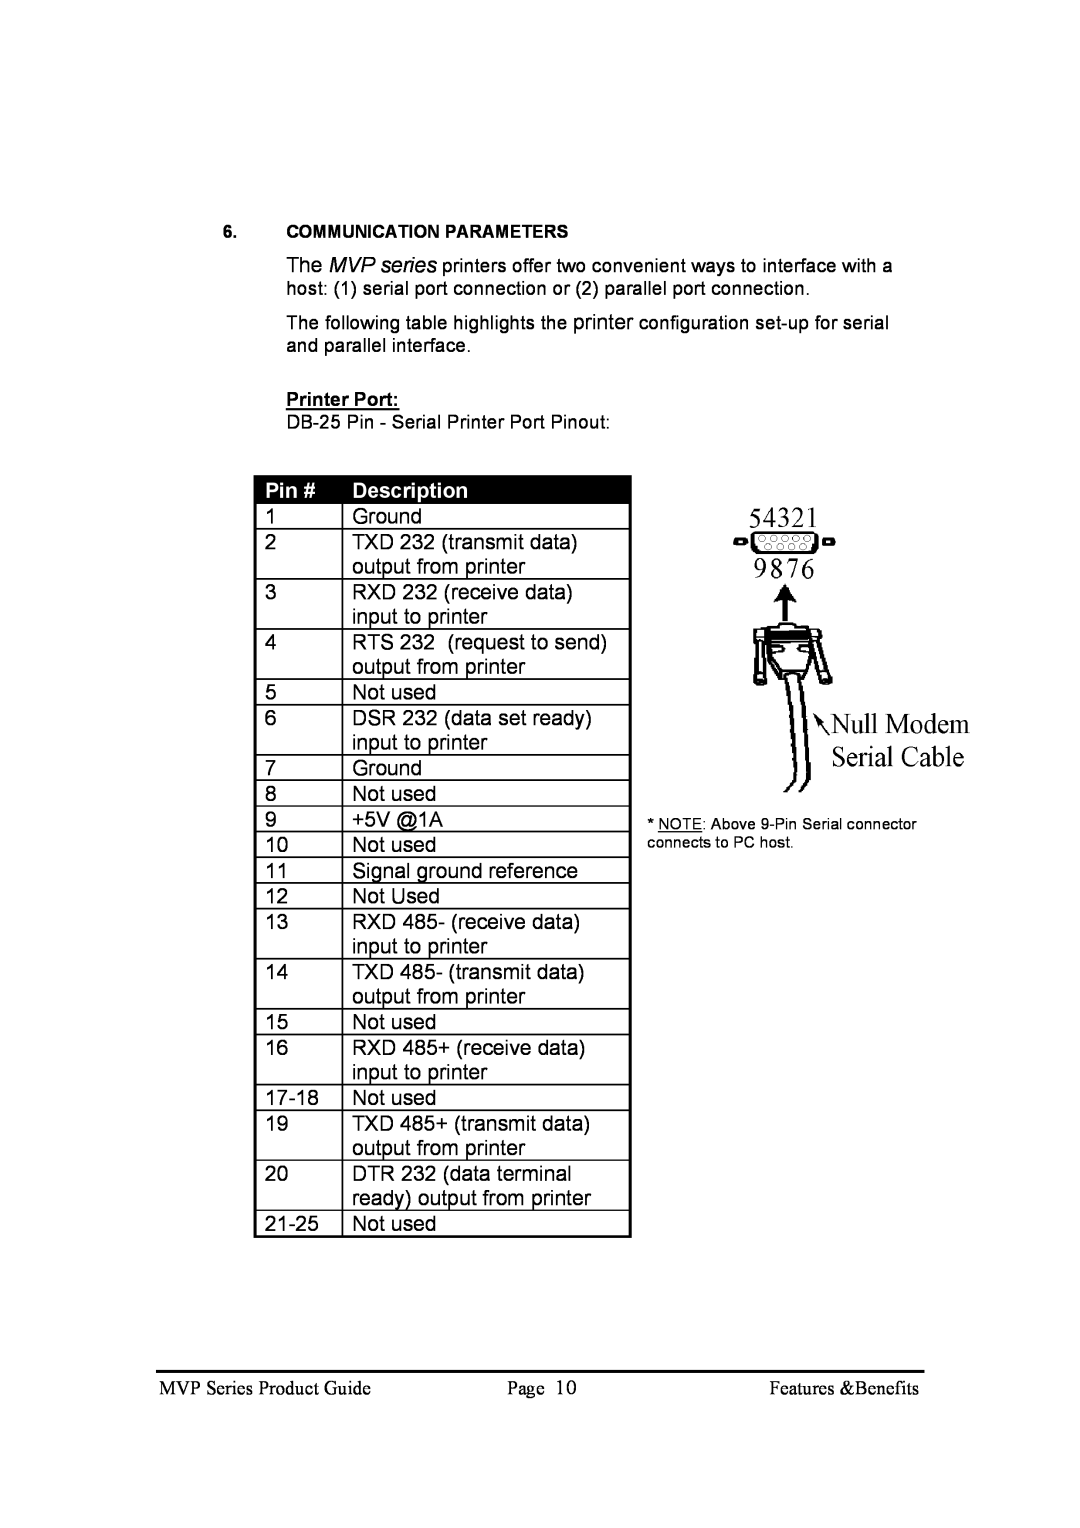 Brady 200MVP, 300MVP manual Pin #, Description, Printer Port 